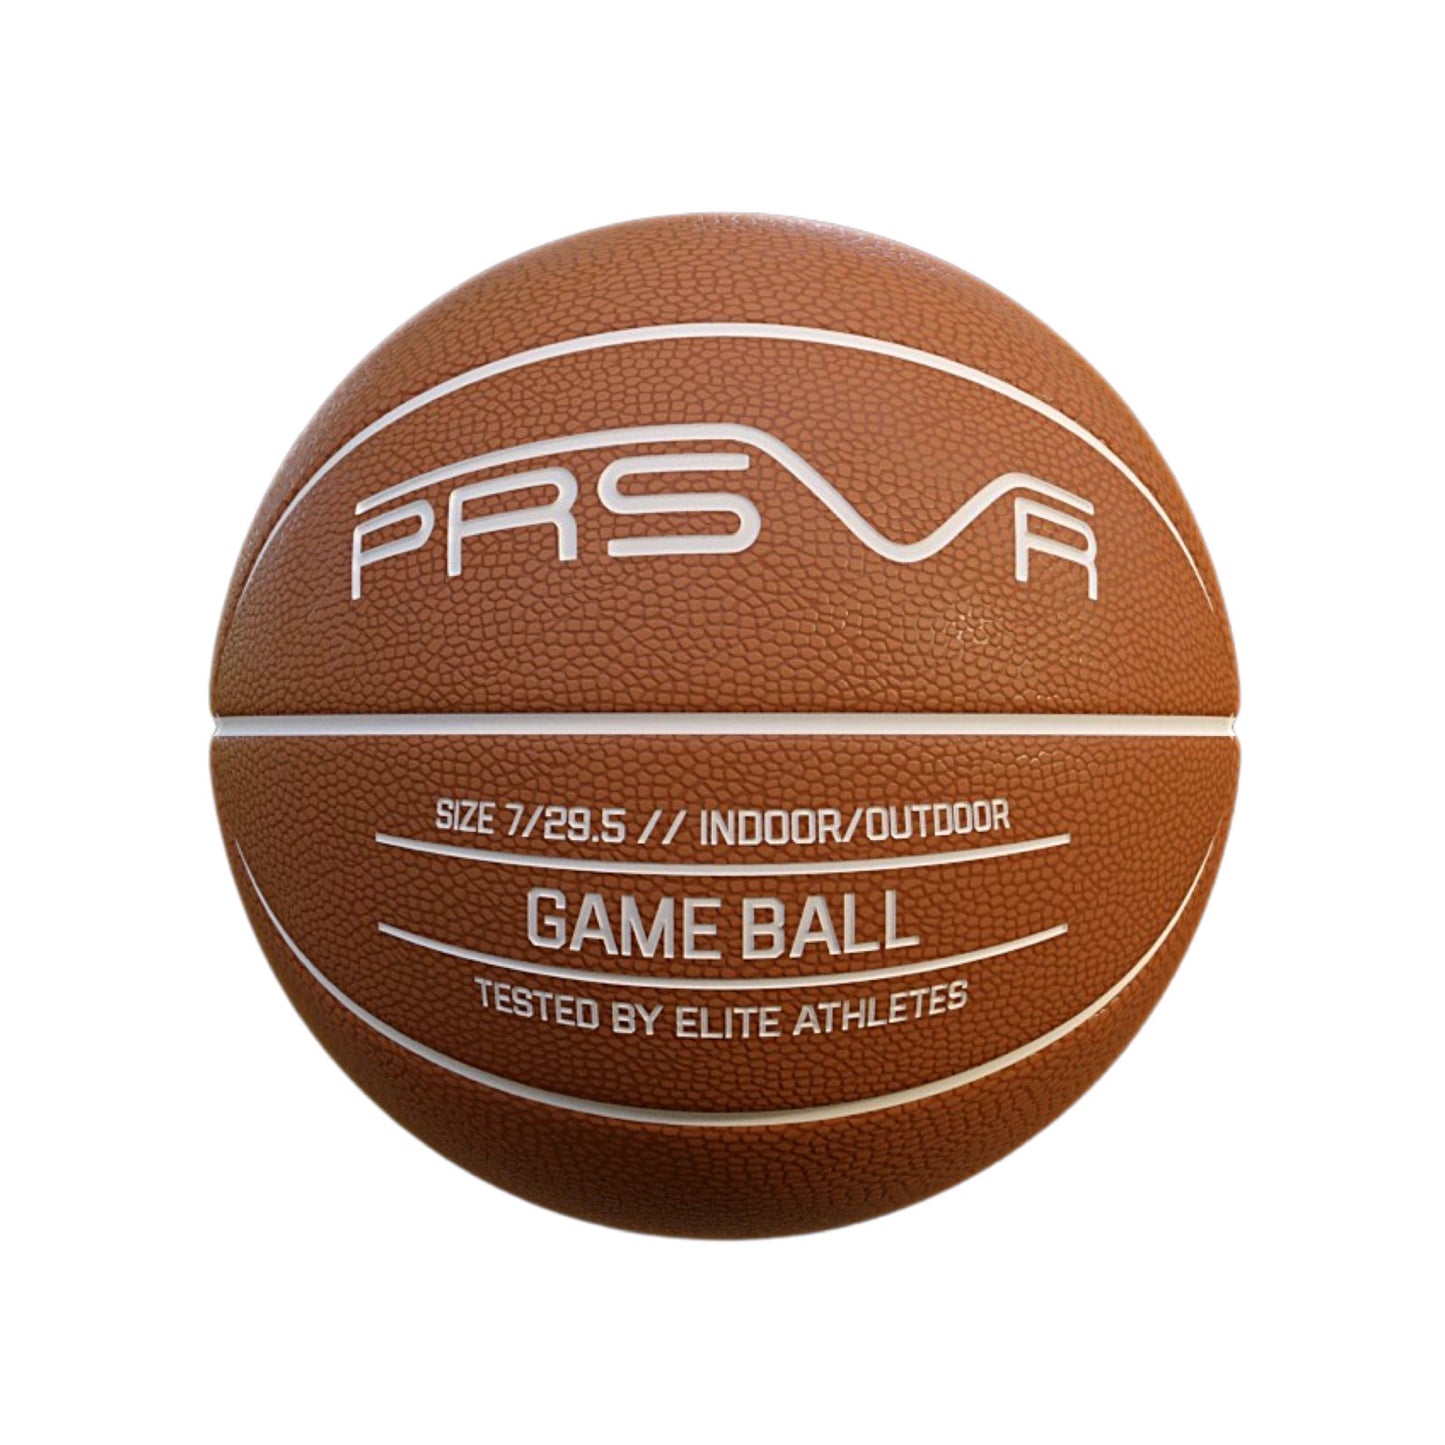 The PRSVR Basketball